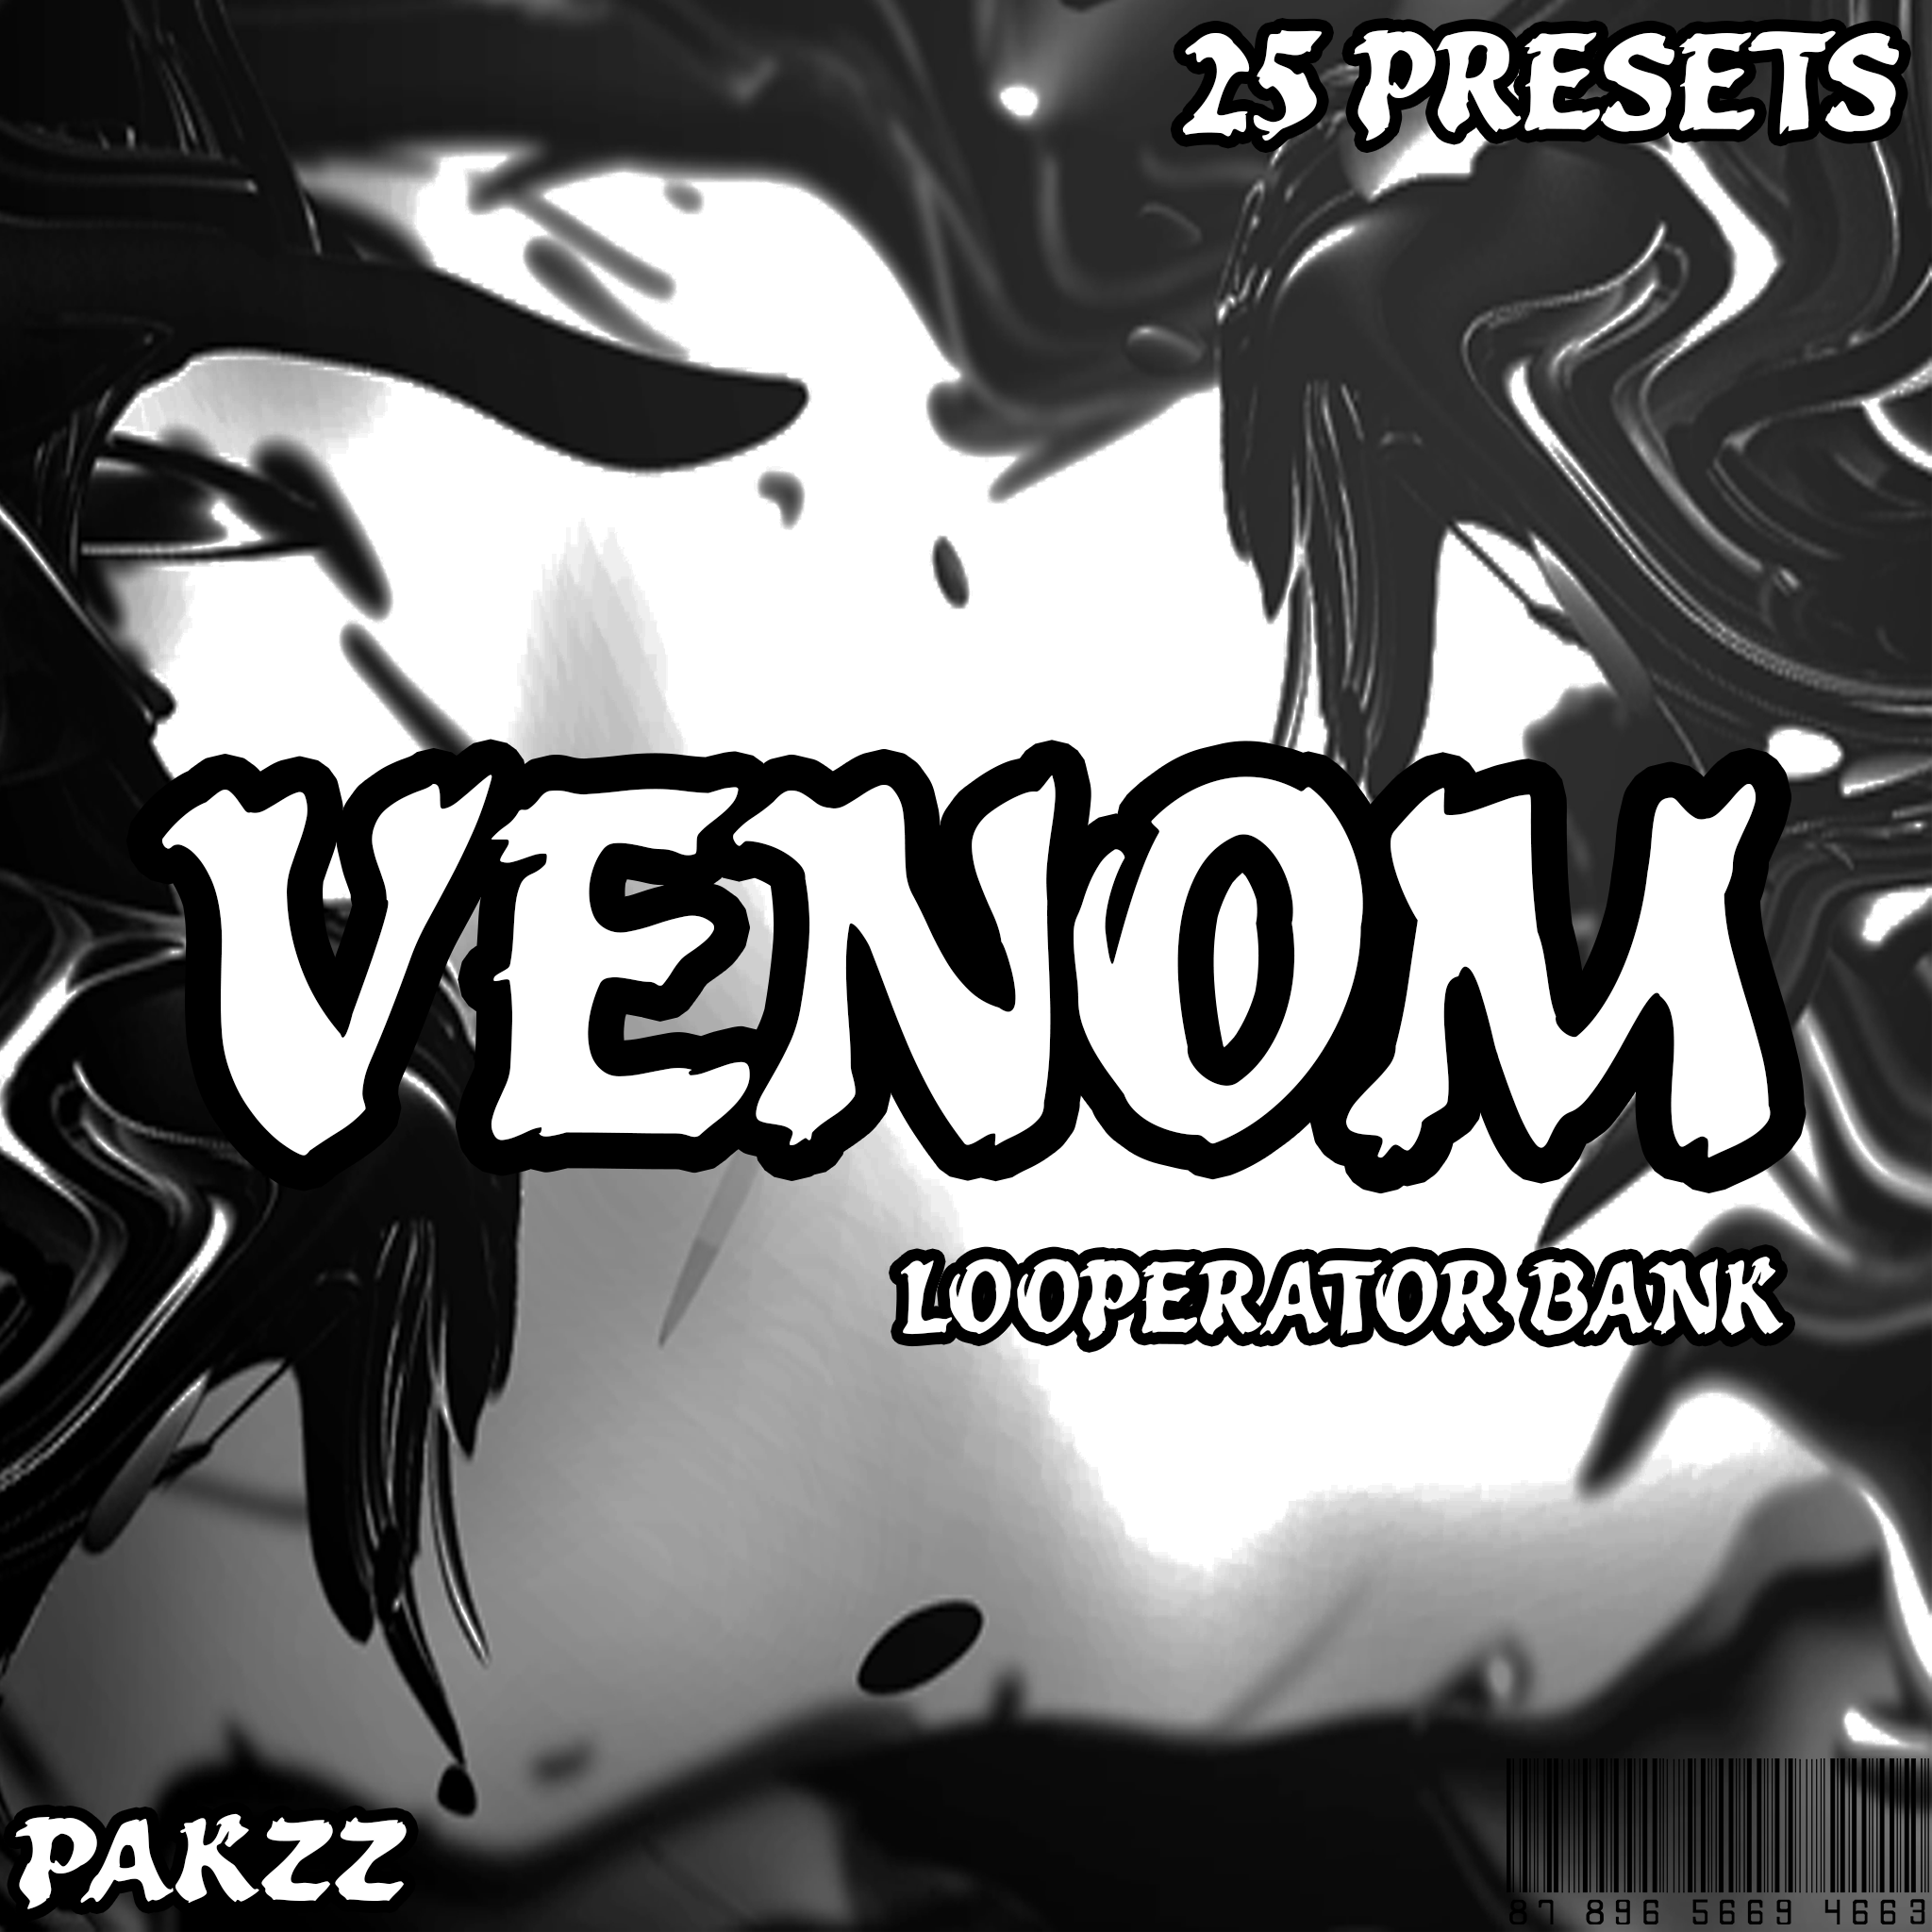 The Venom Looperator Bank